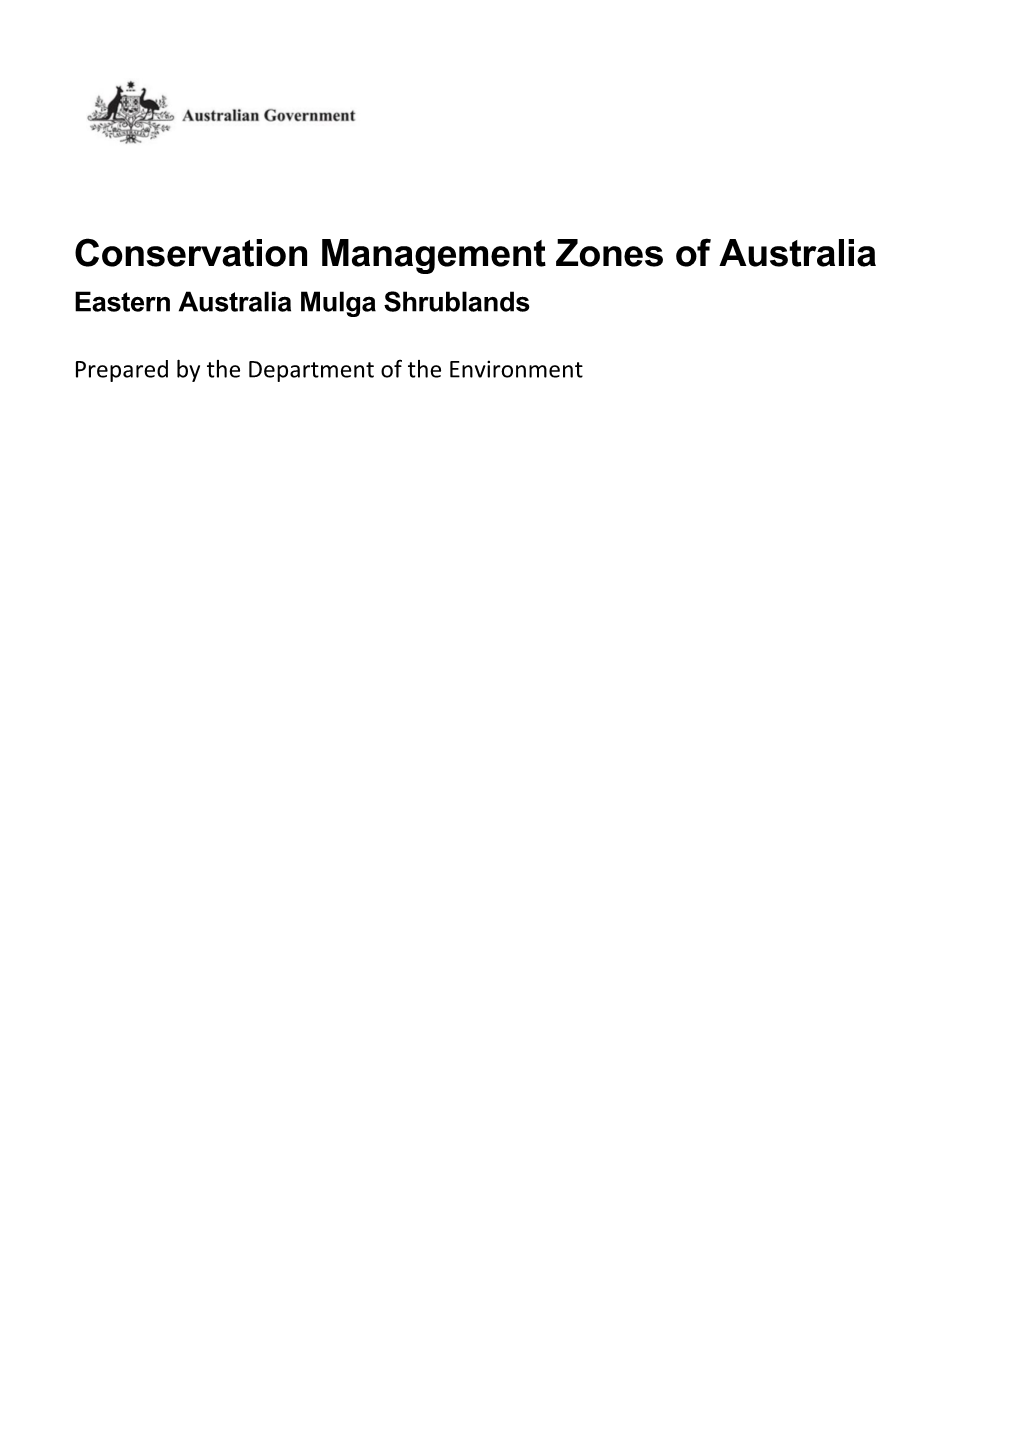 Conservation Management Zones of Australia: Eastern Australia Mulga Shrublands